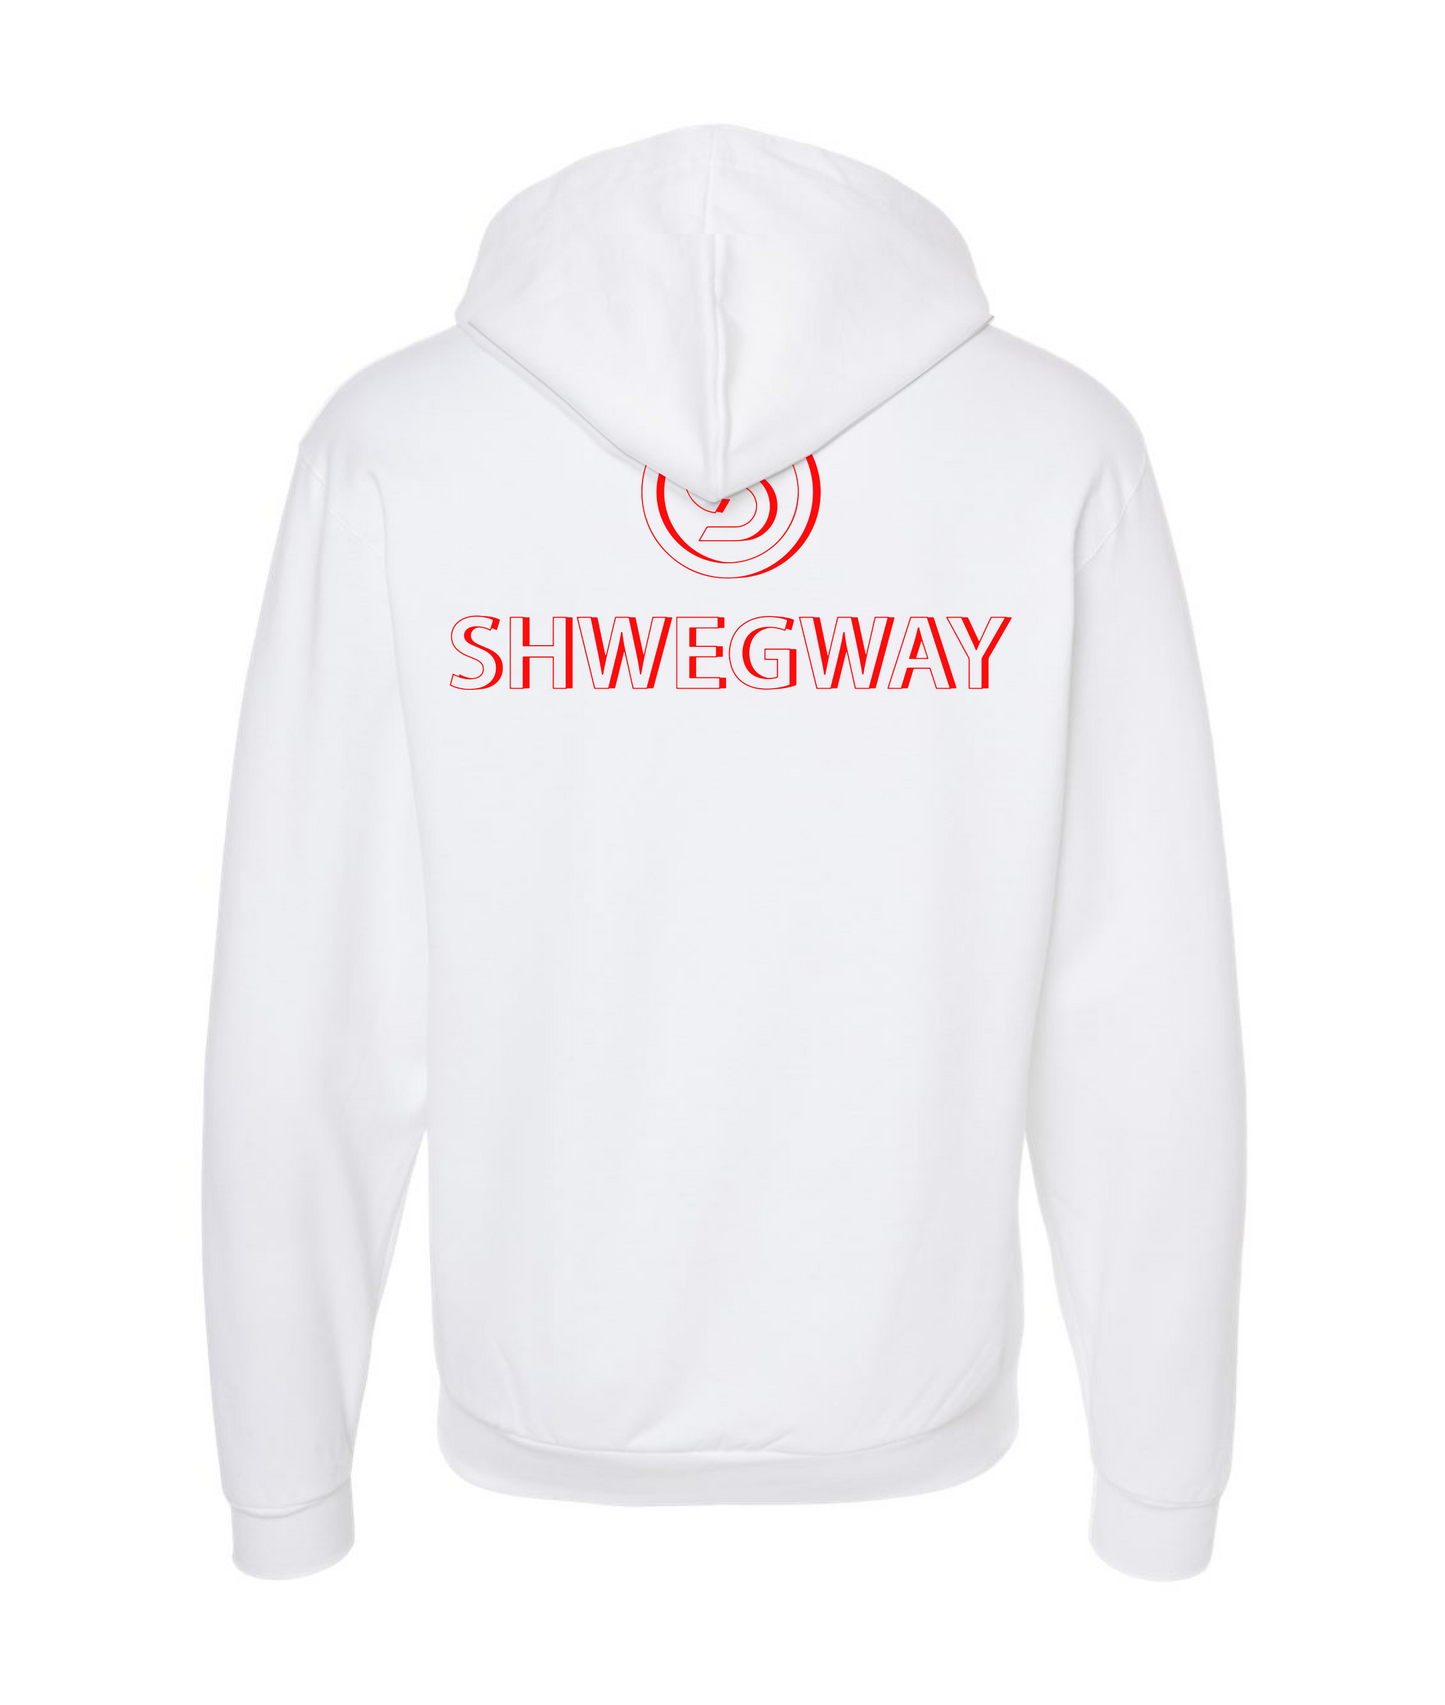 Shwegway Inc. - Logo - White Zip Hoodie